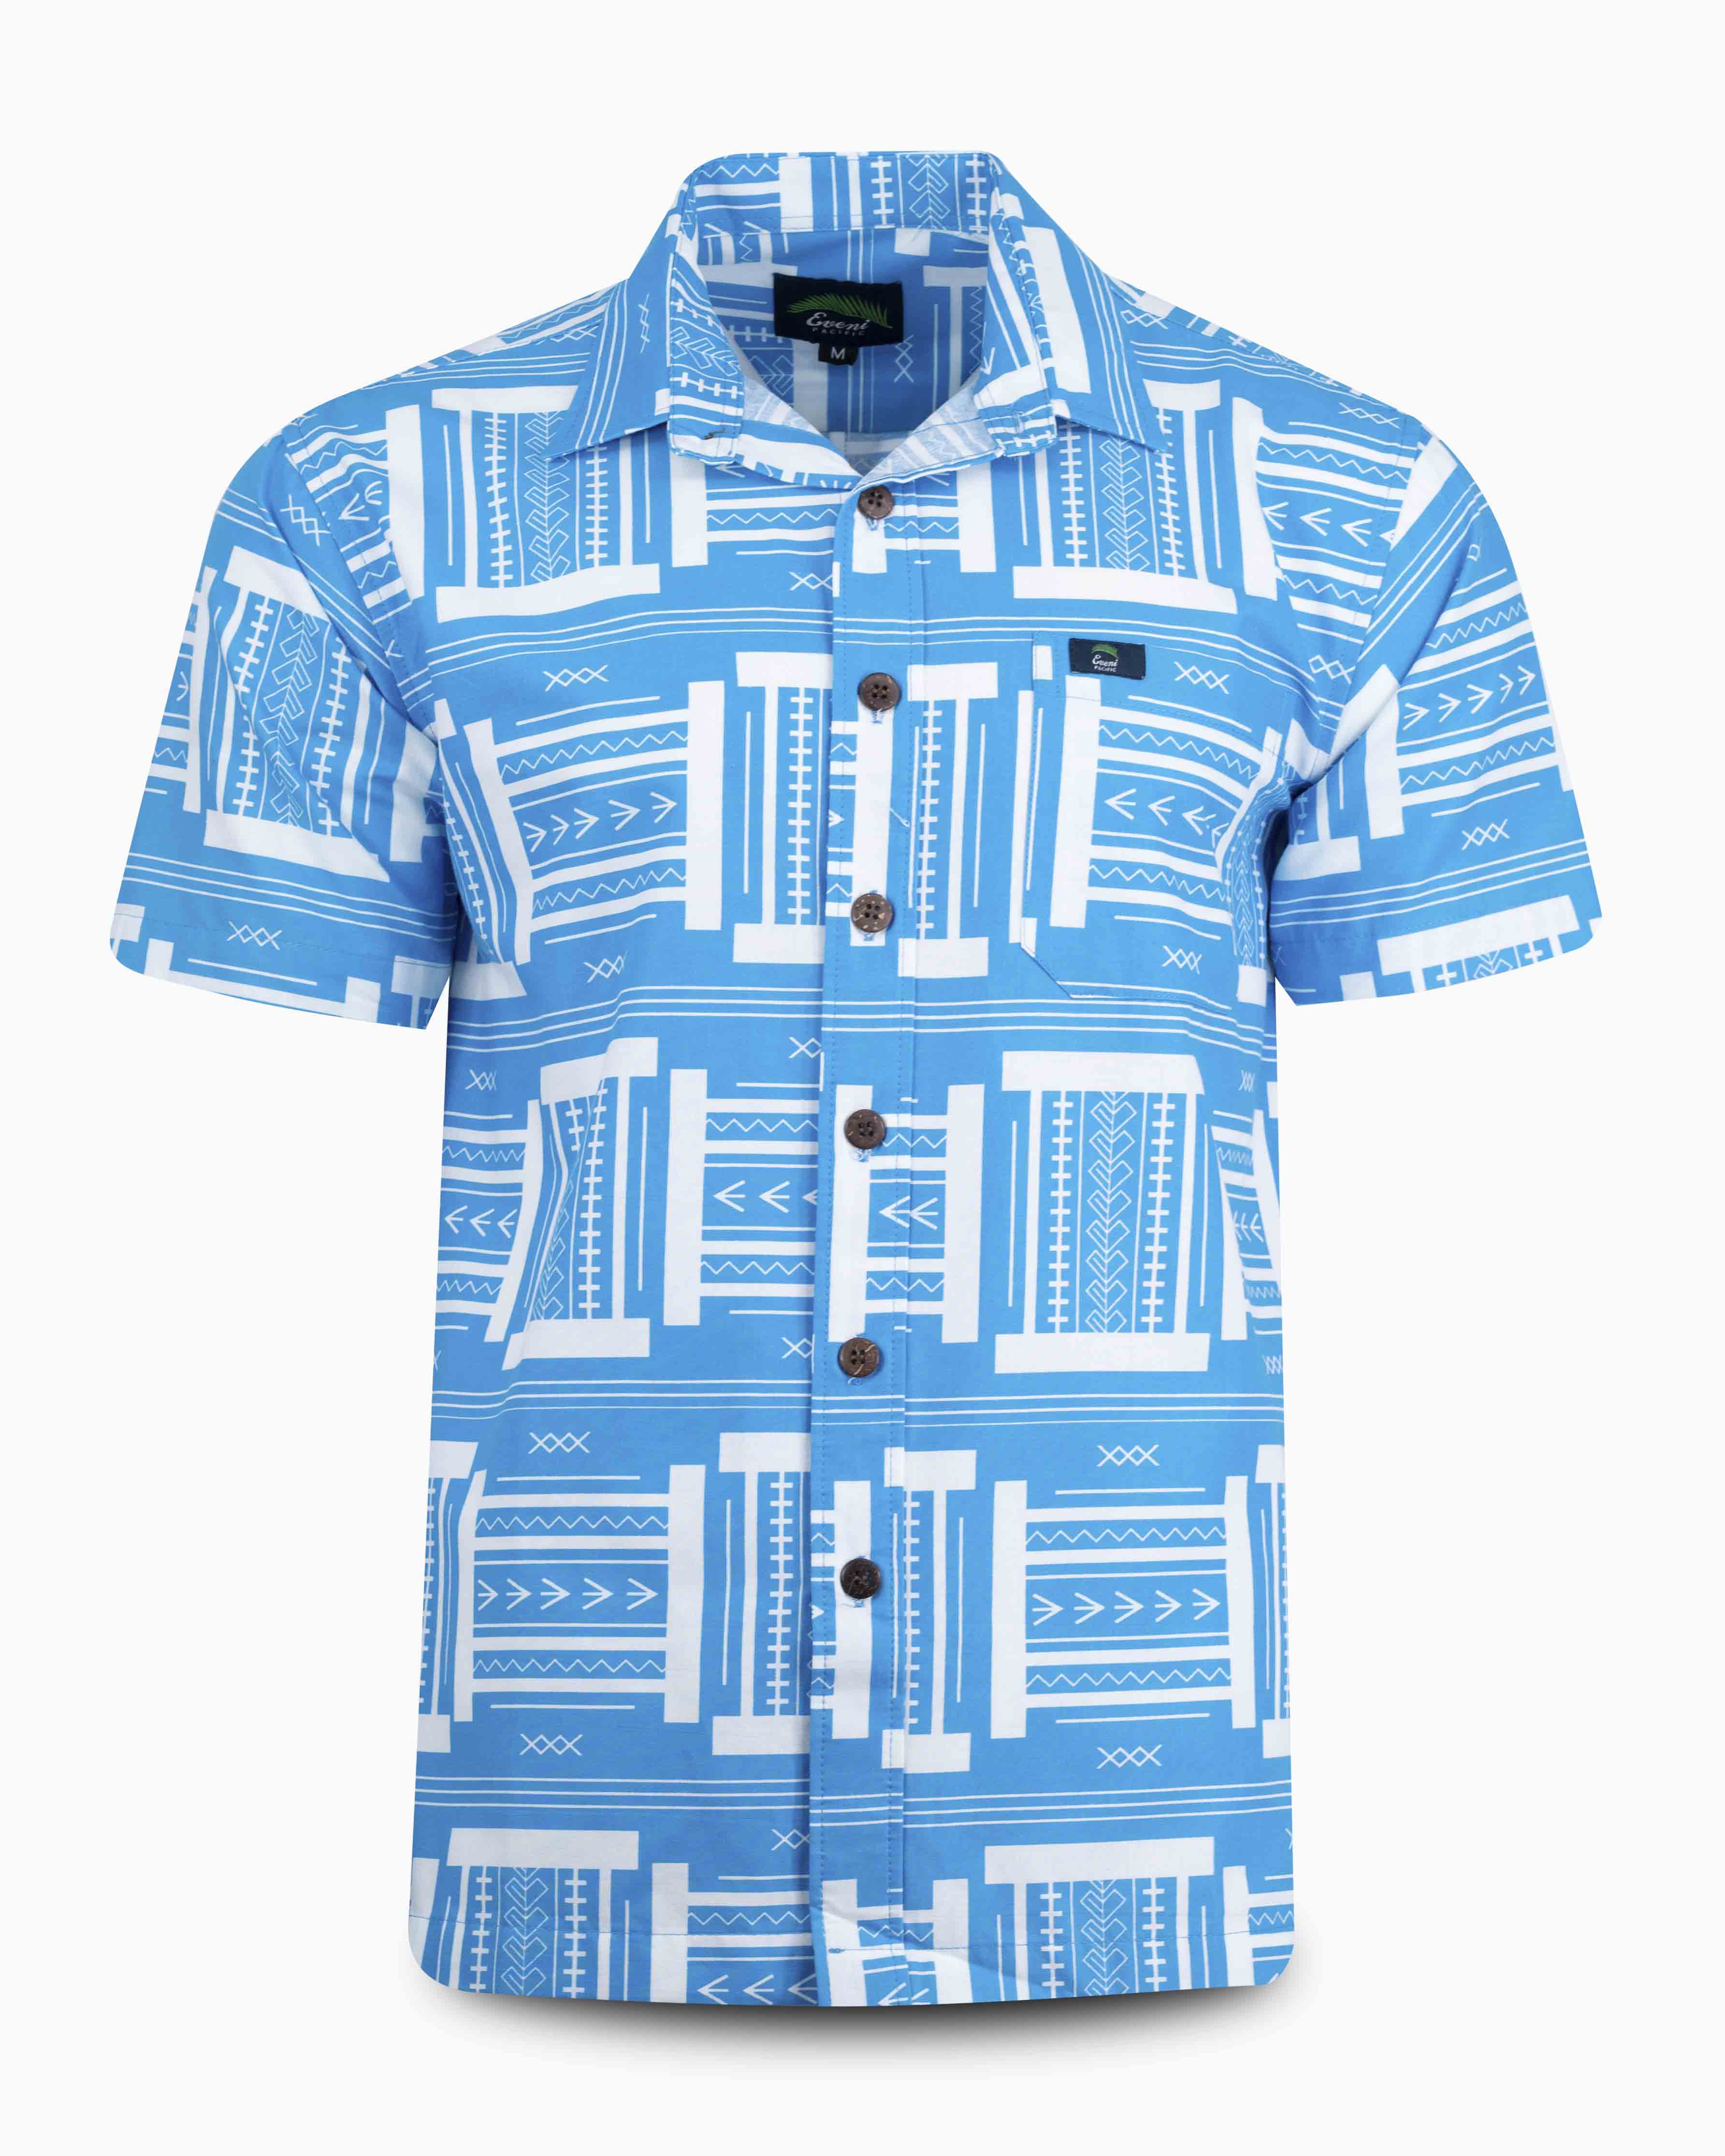 Eveni Pacific Men's Classic Shirt - AALIYAH BLUE